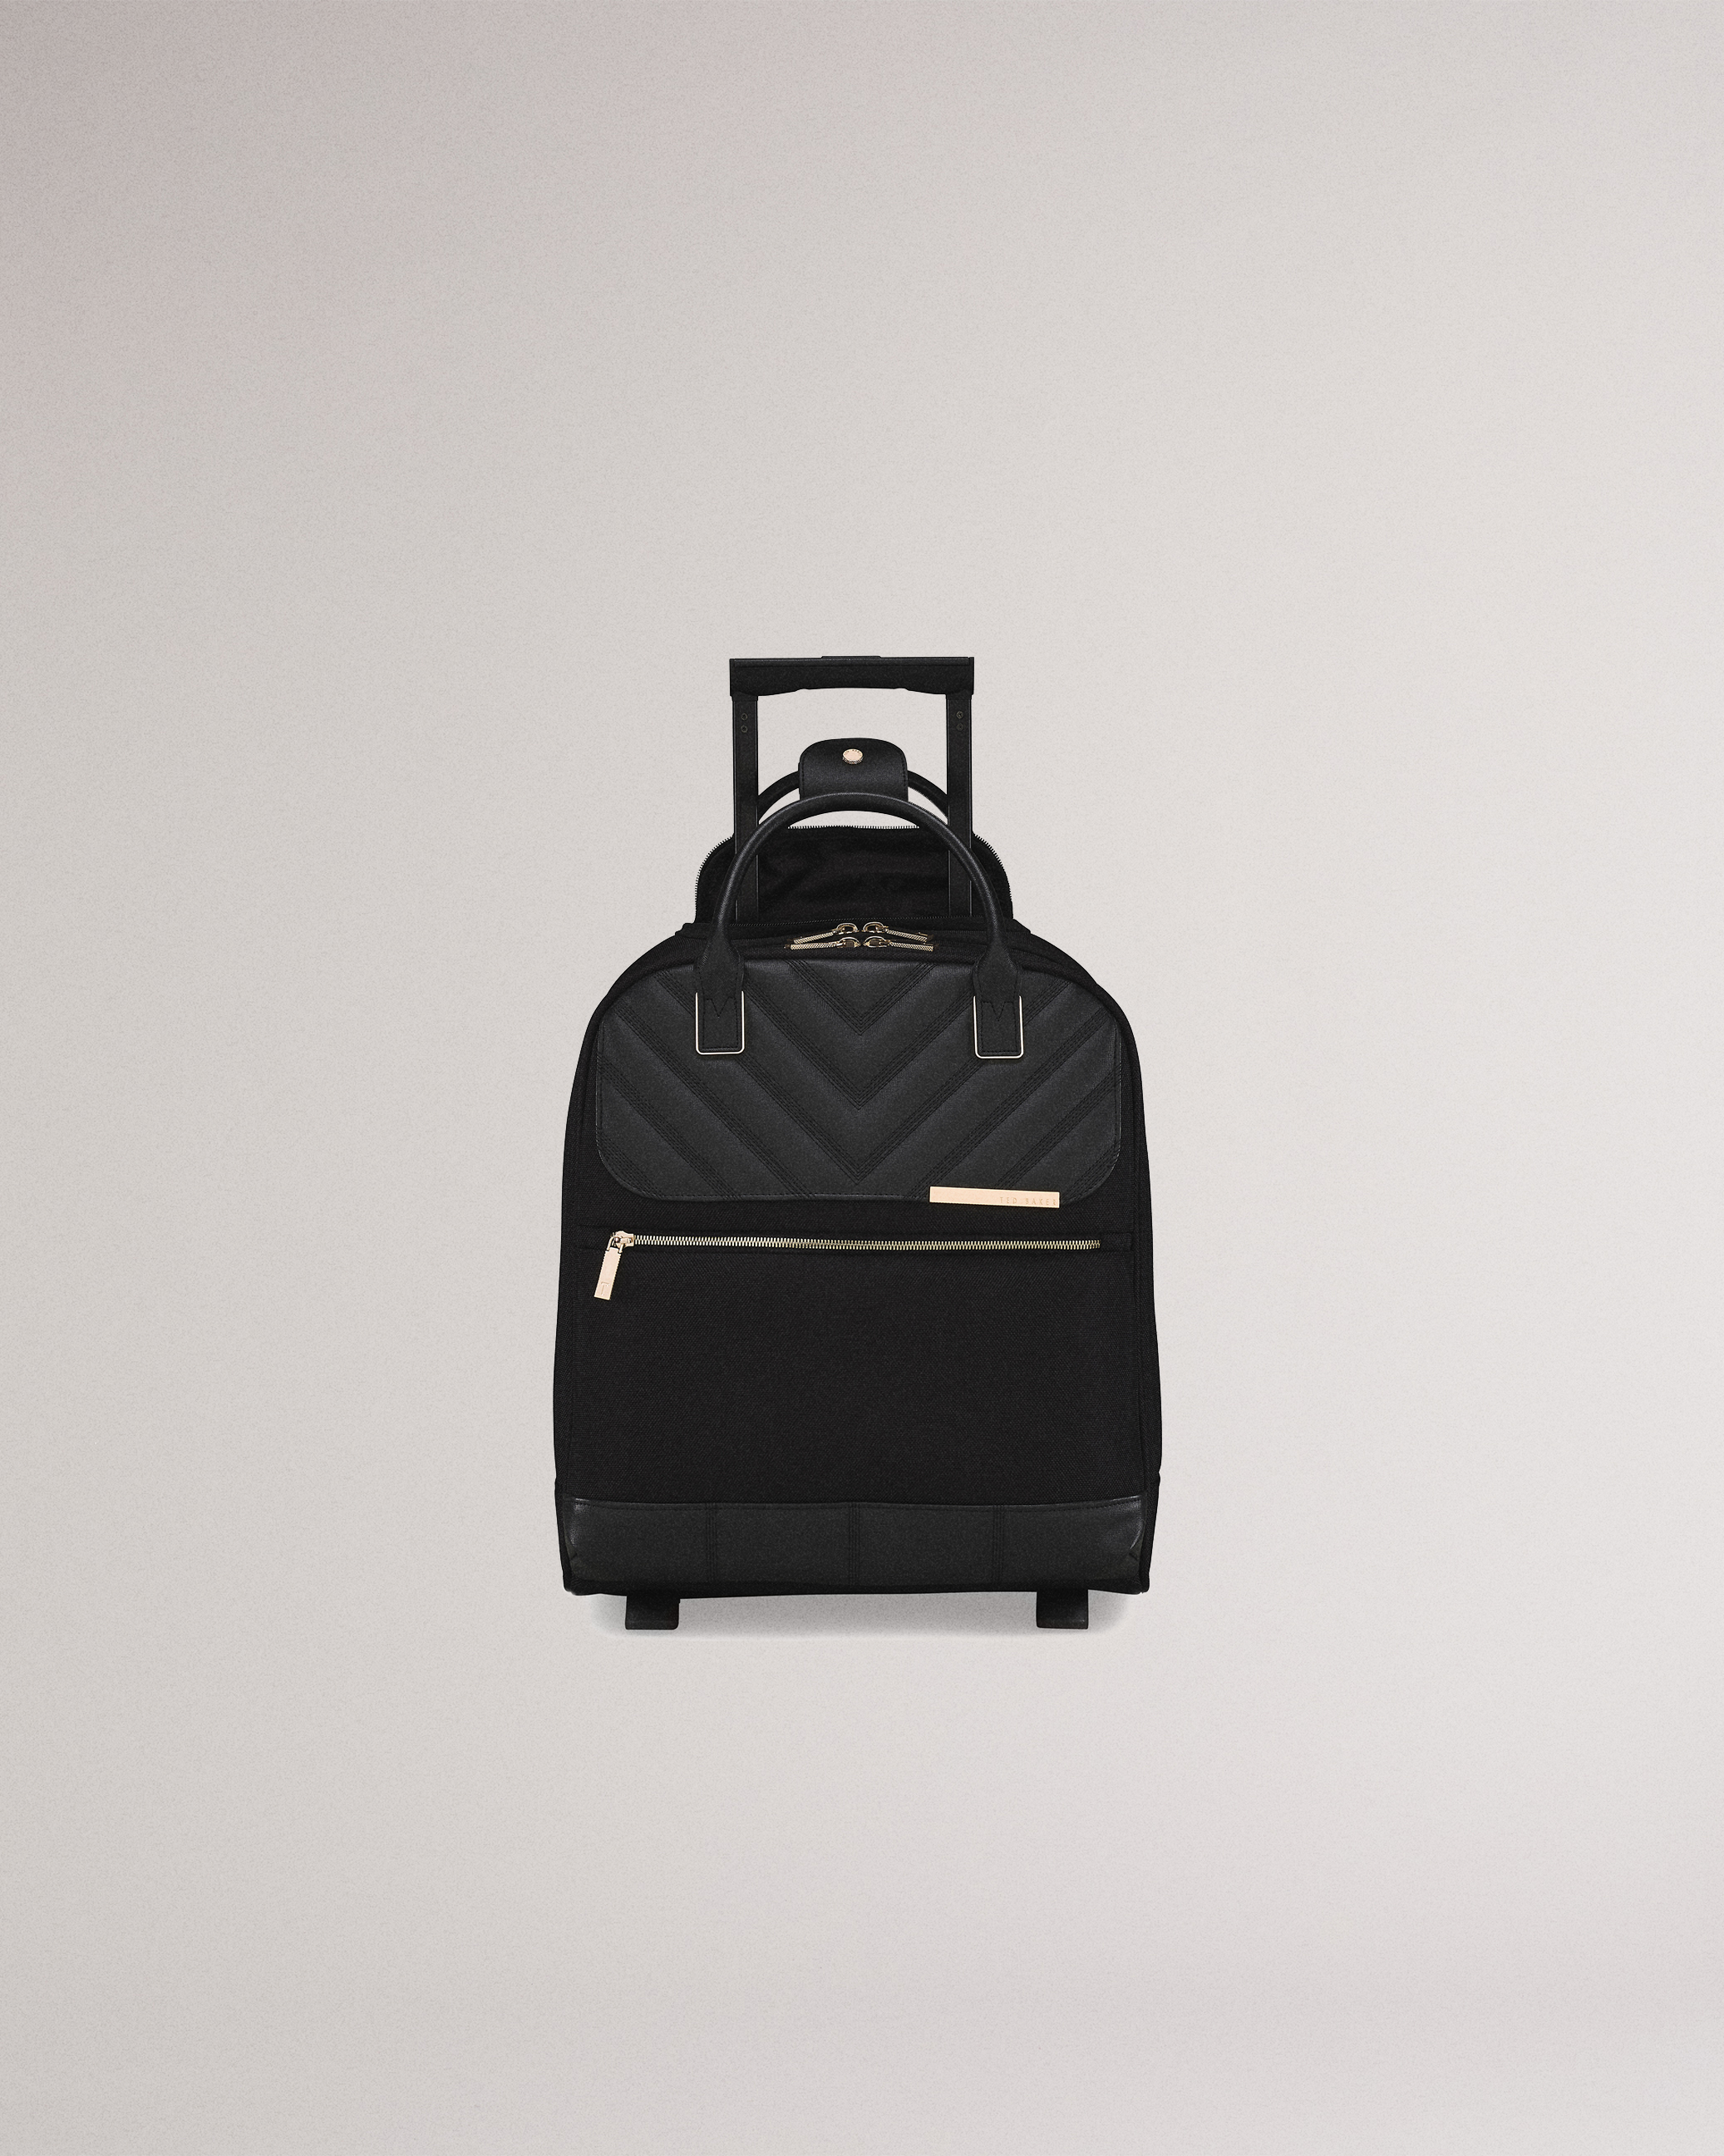 ALAINIE - BLACK, Suitcases & Travel Bags